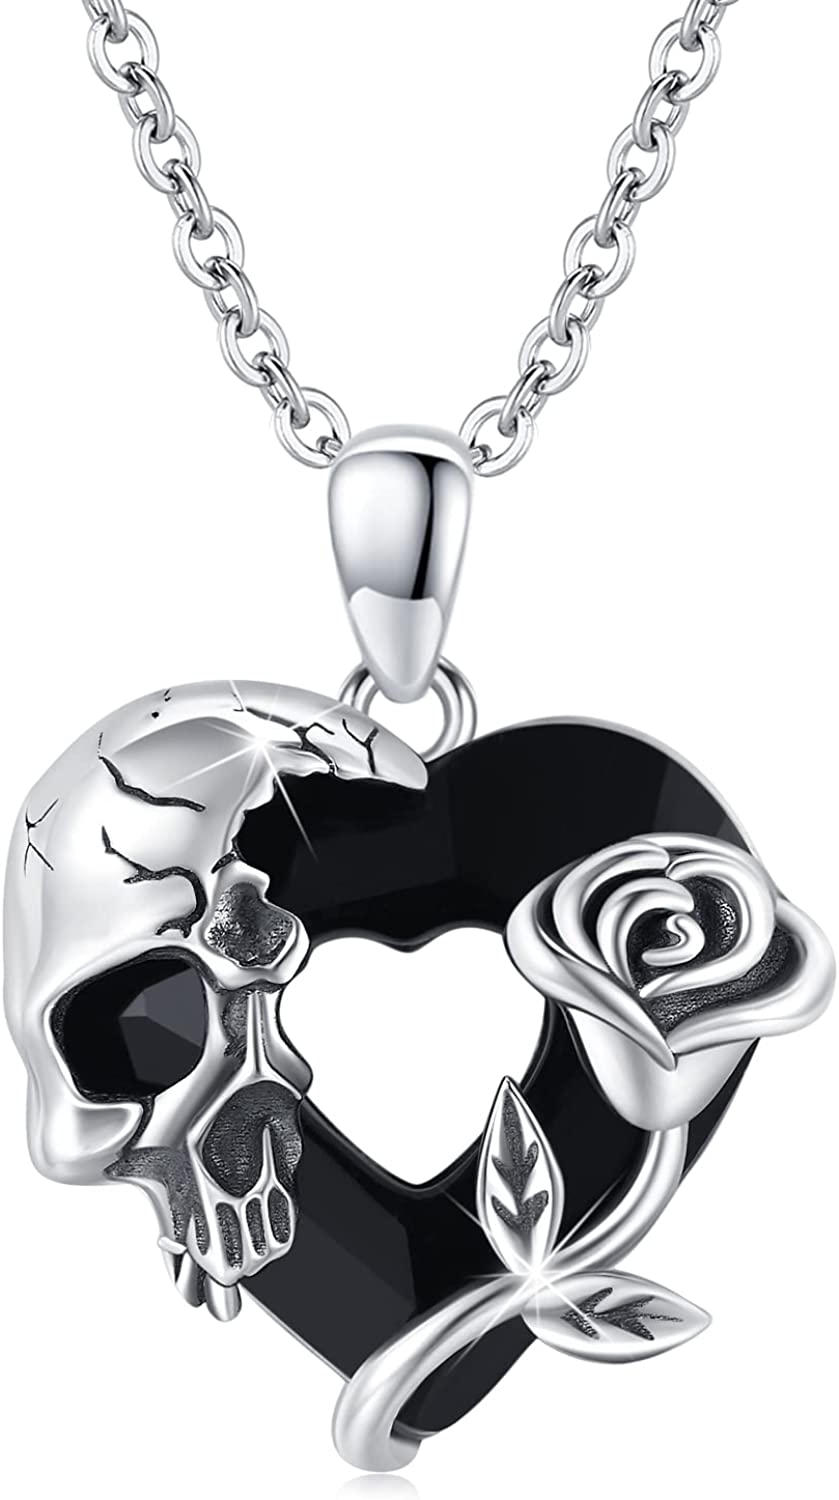 Skull heart-shaped necklace